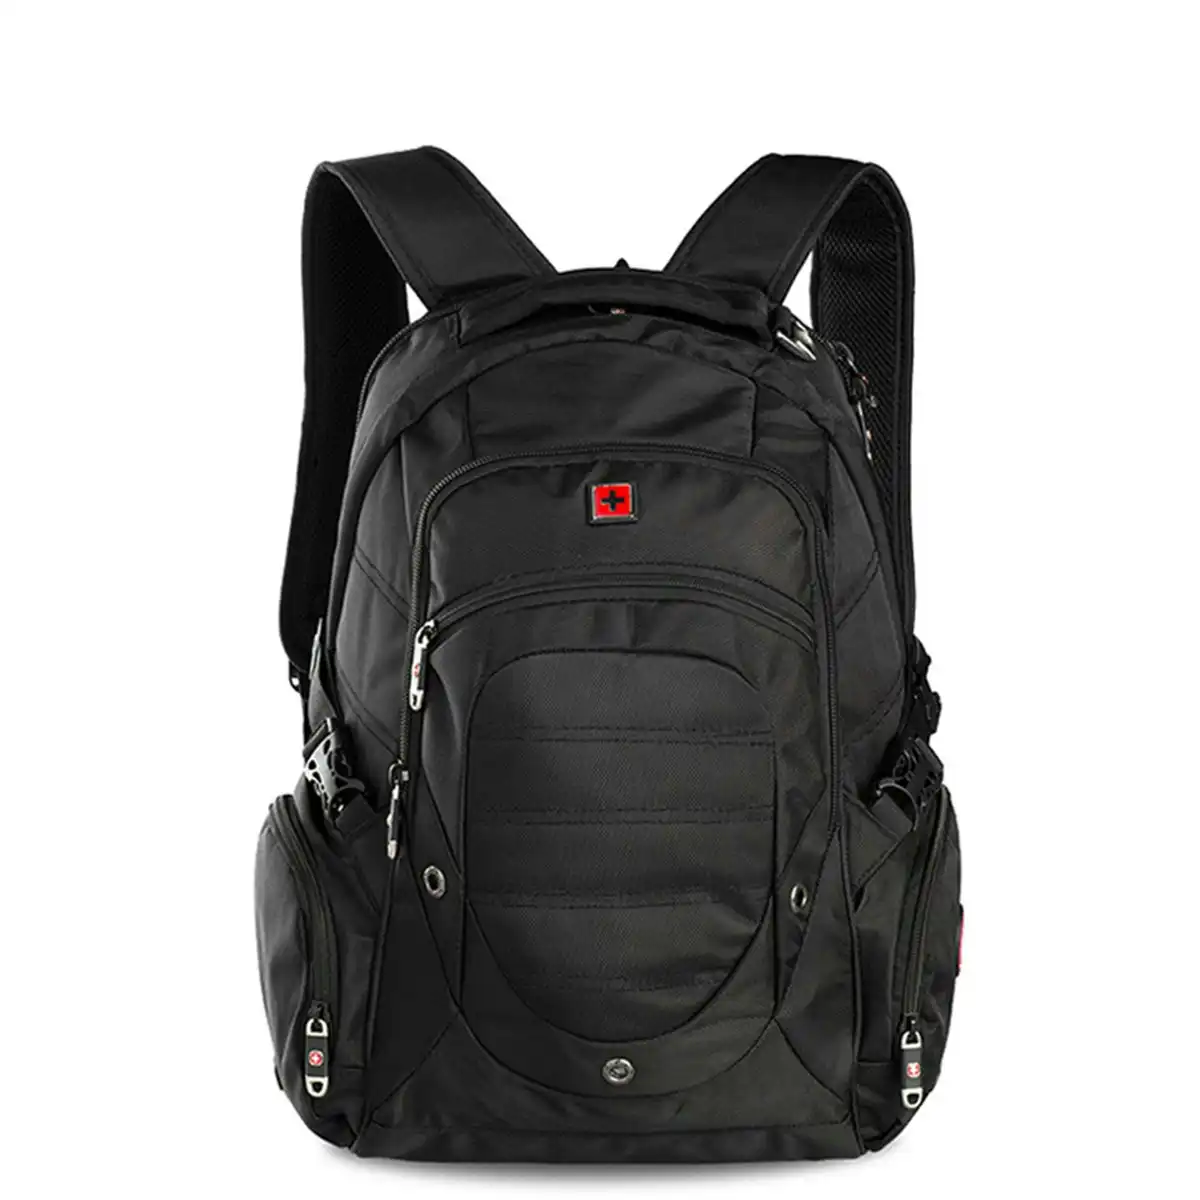 Swisswin Swiss Water-Resistant 17" Laptop Backpack School Backpack Travel Shoulder Bag Black SW9725I